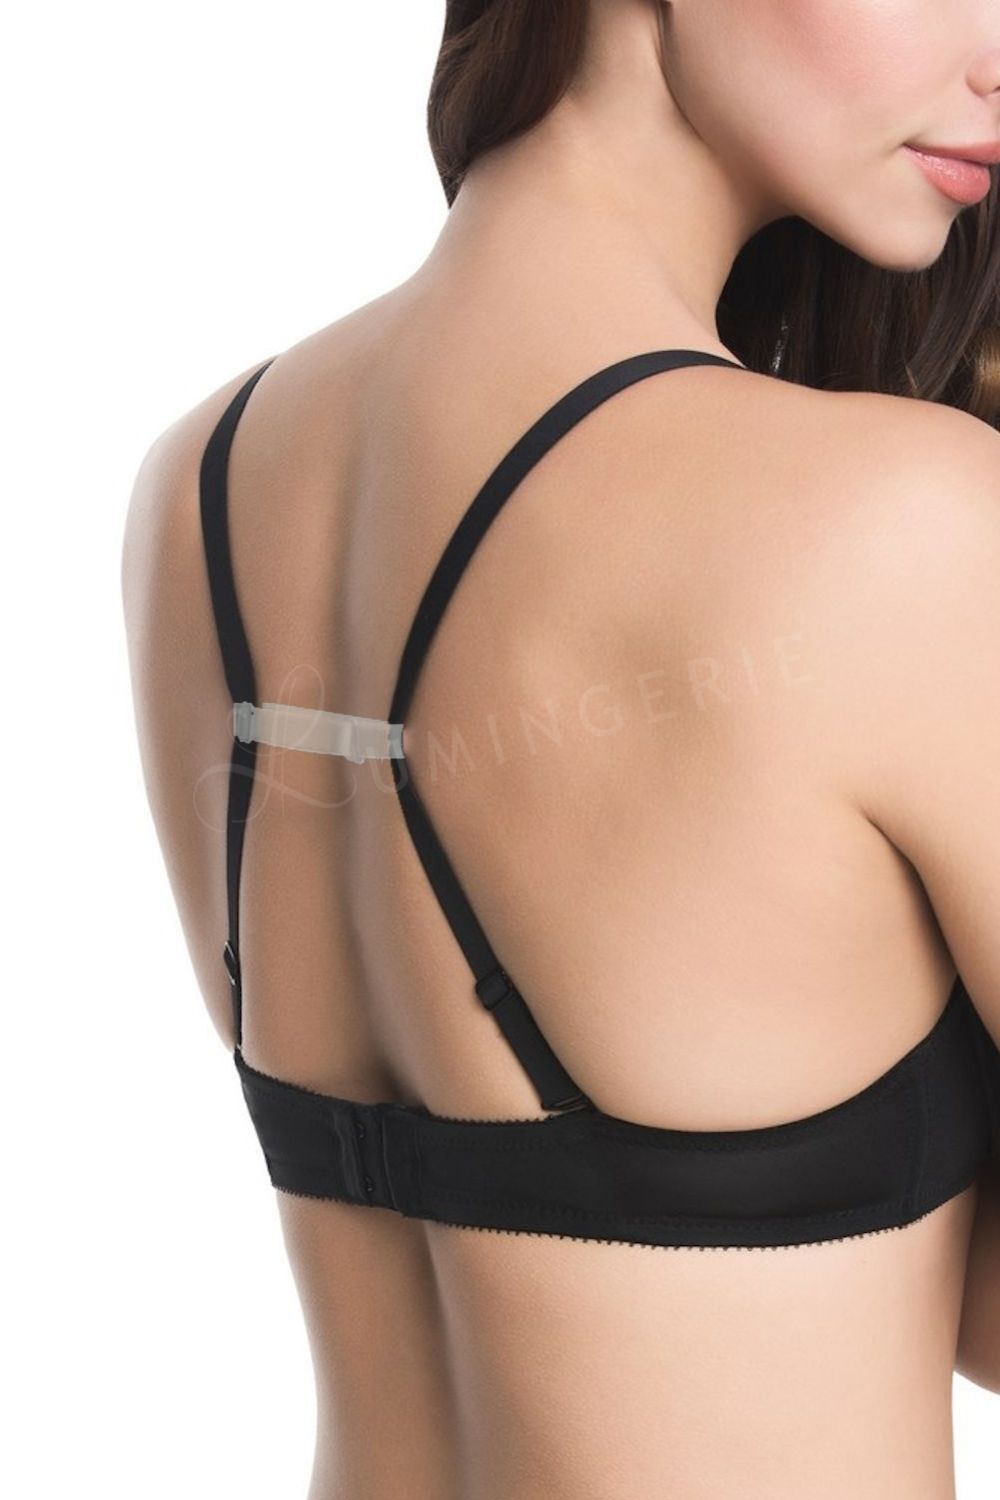 Julimex Accessories Bra Strap Holder Clear  Lumingerie bras and underwear  for big busts